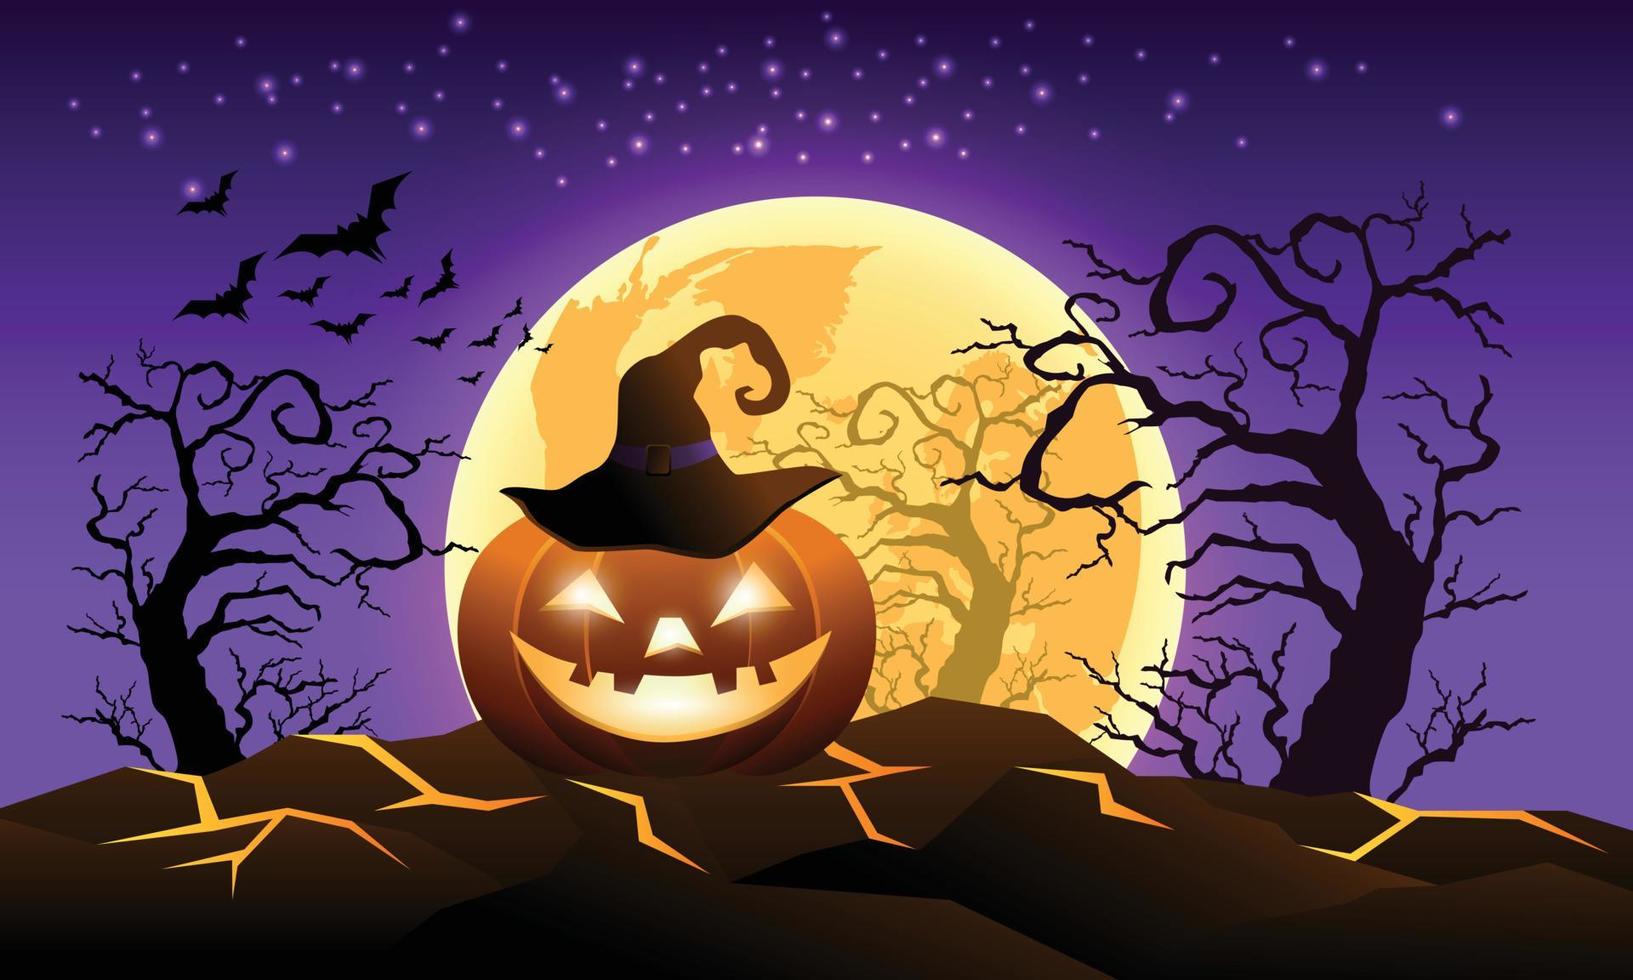 Happy halloween background dark night full moon with pumpkin,  tree and bats. vector illustration.